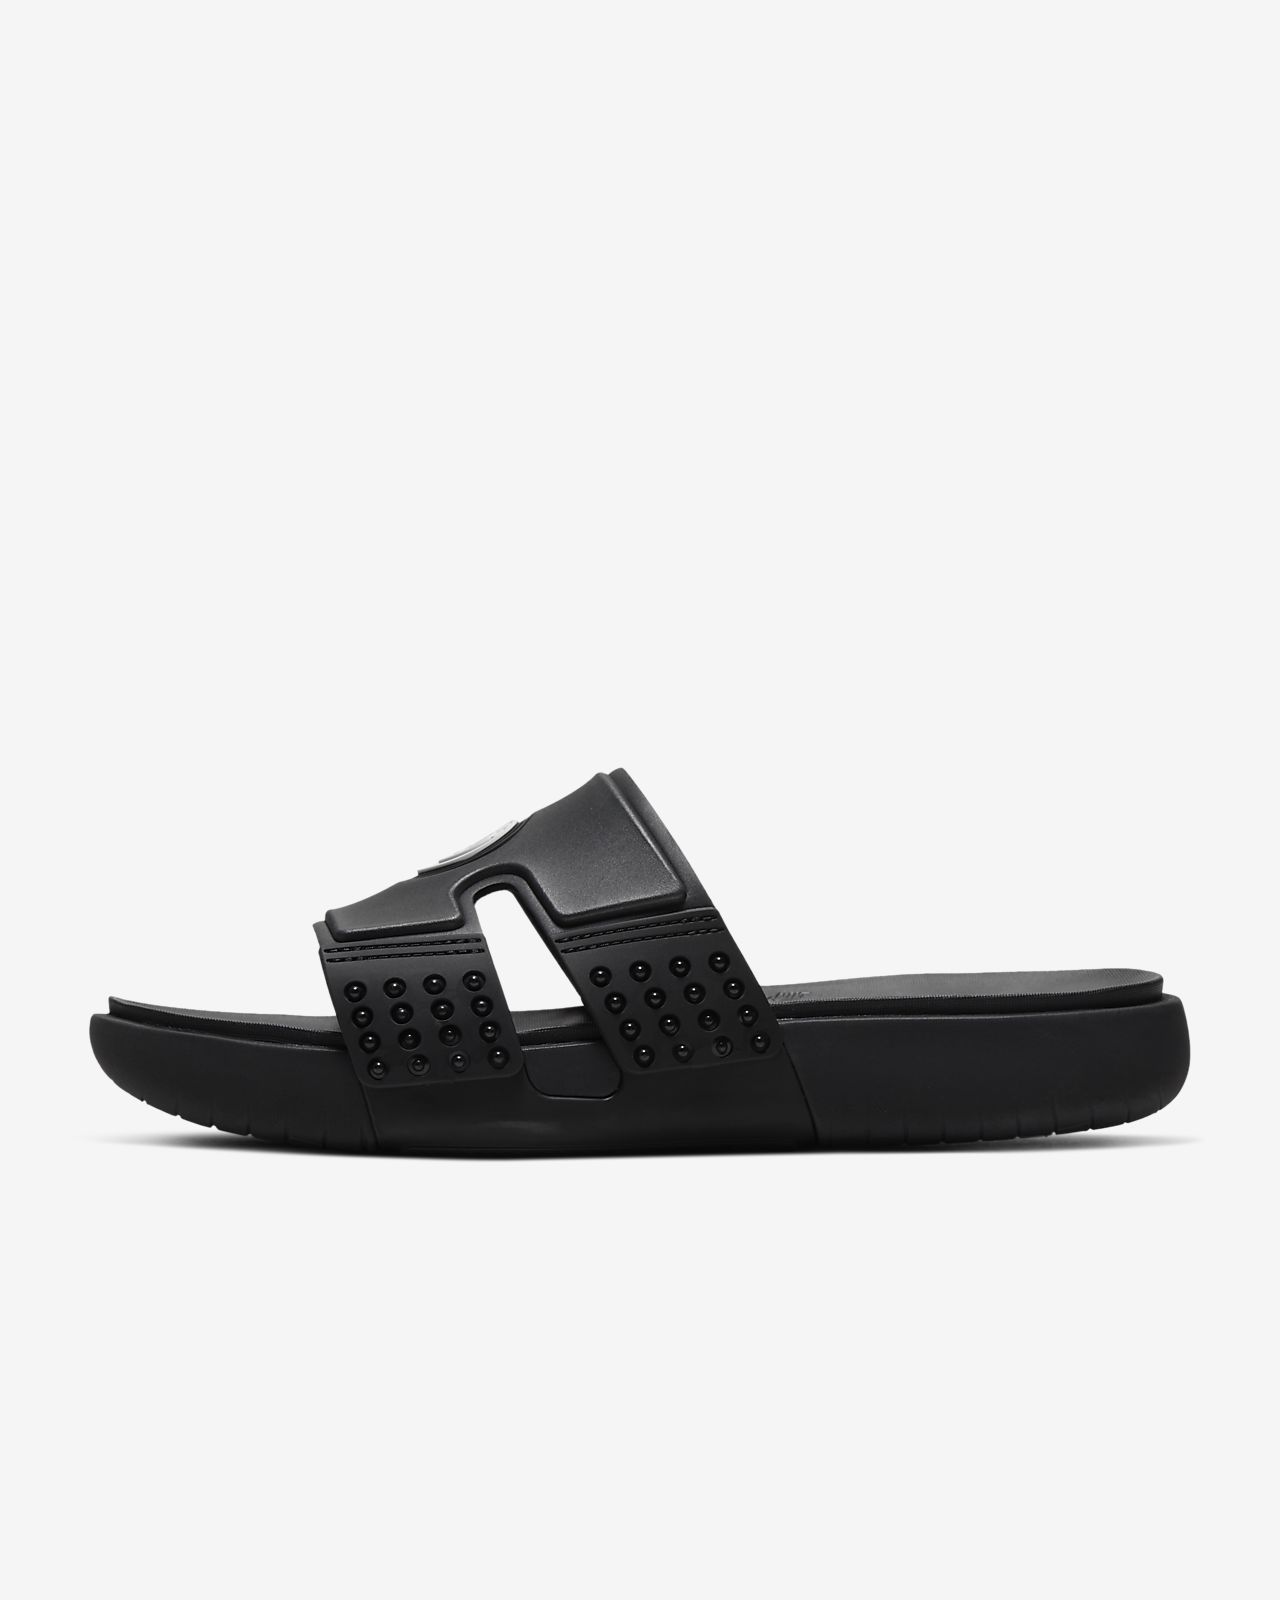 nike sandals black and white